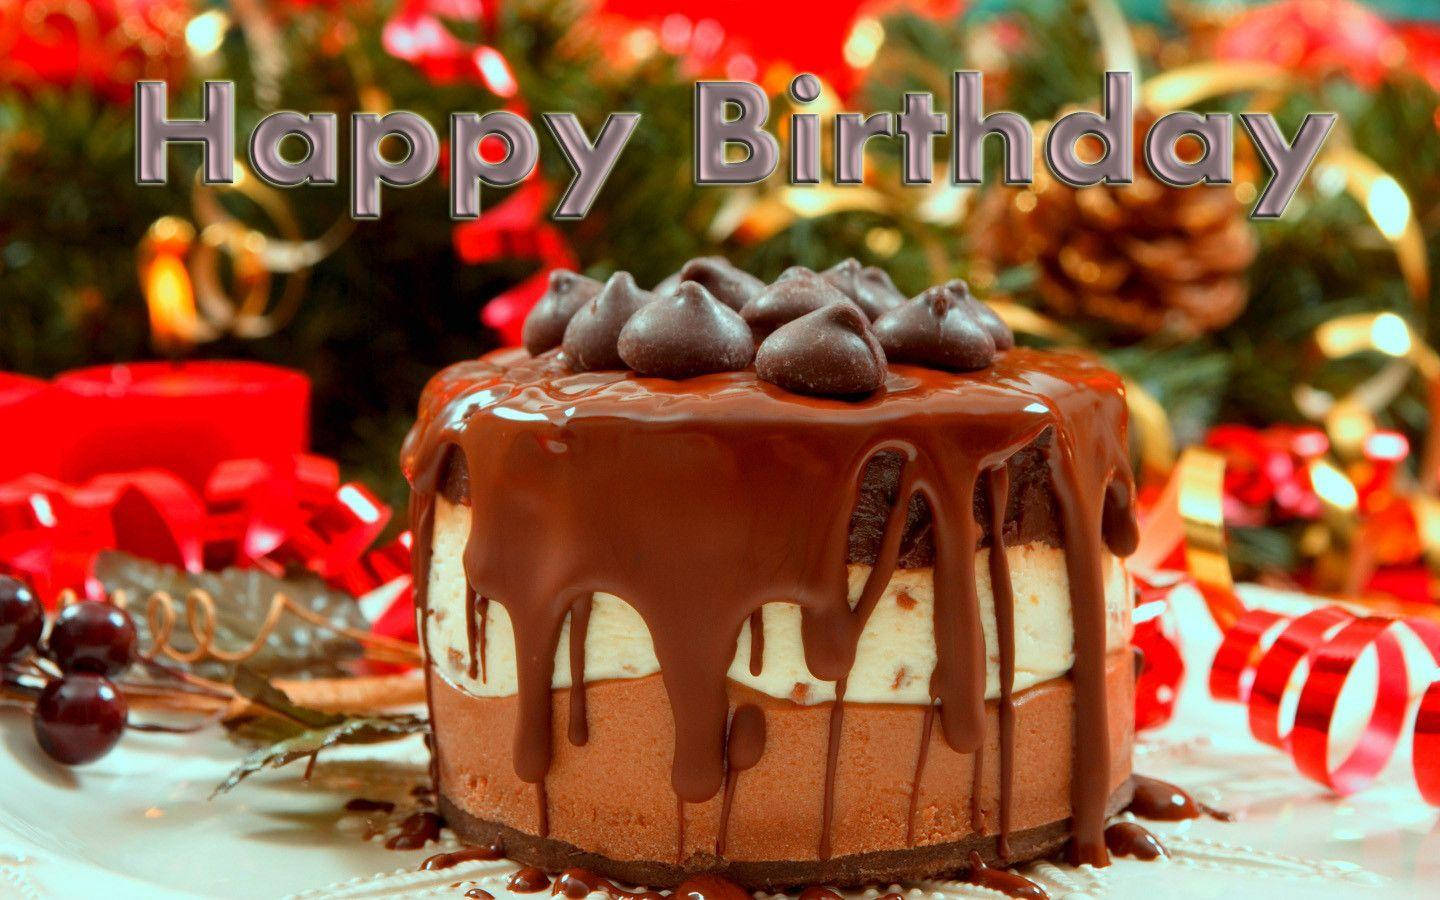 Birthday Cake With Gooey Chocolate Icing Background